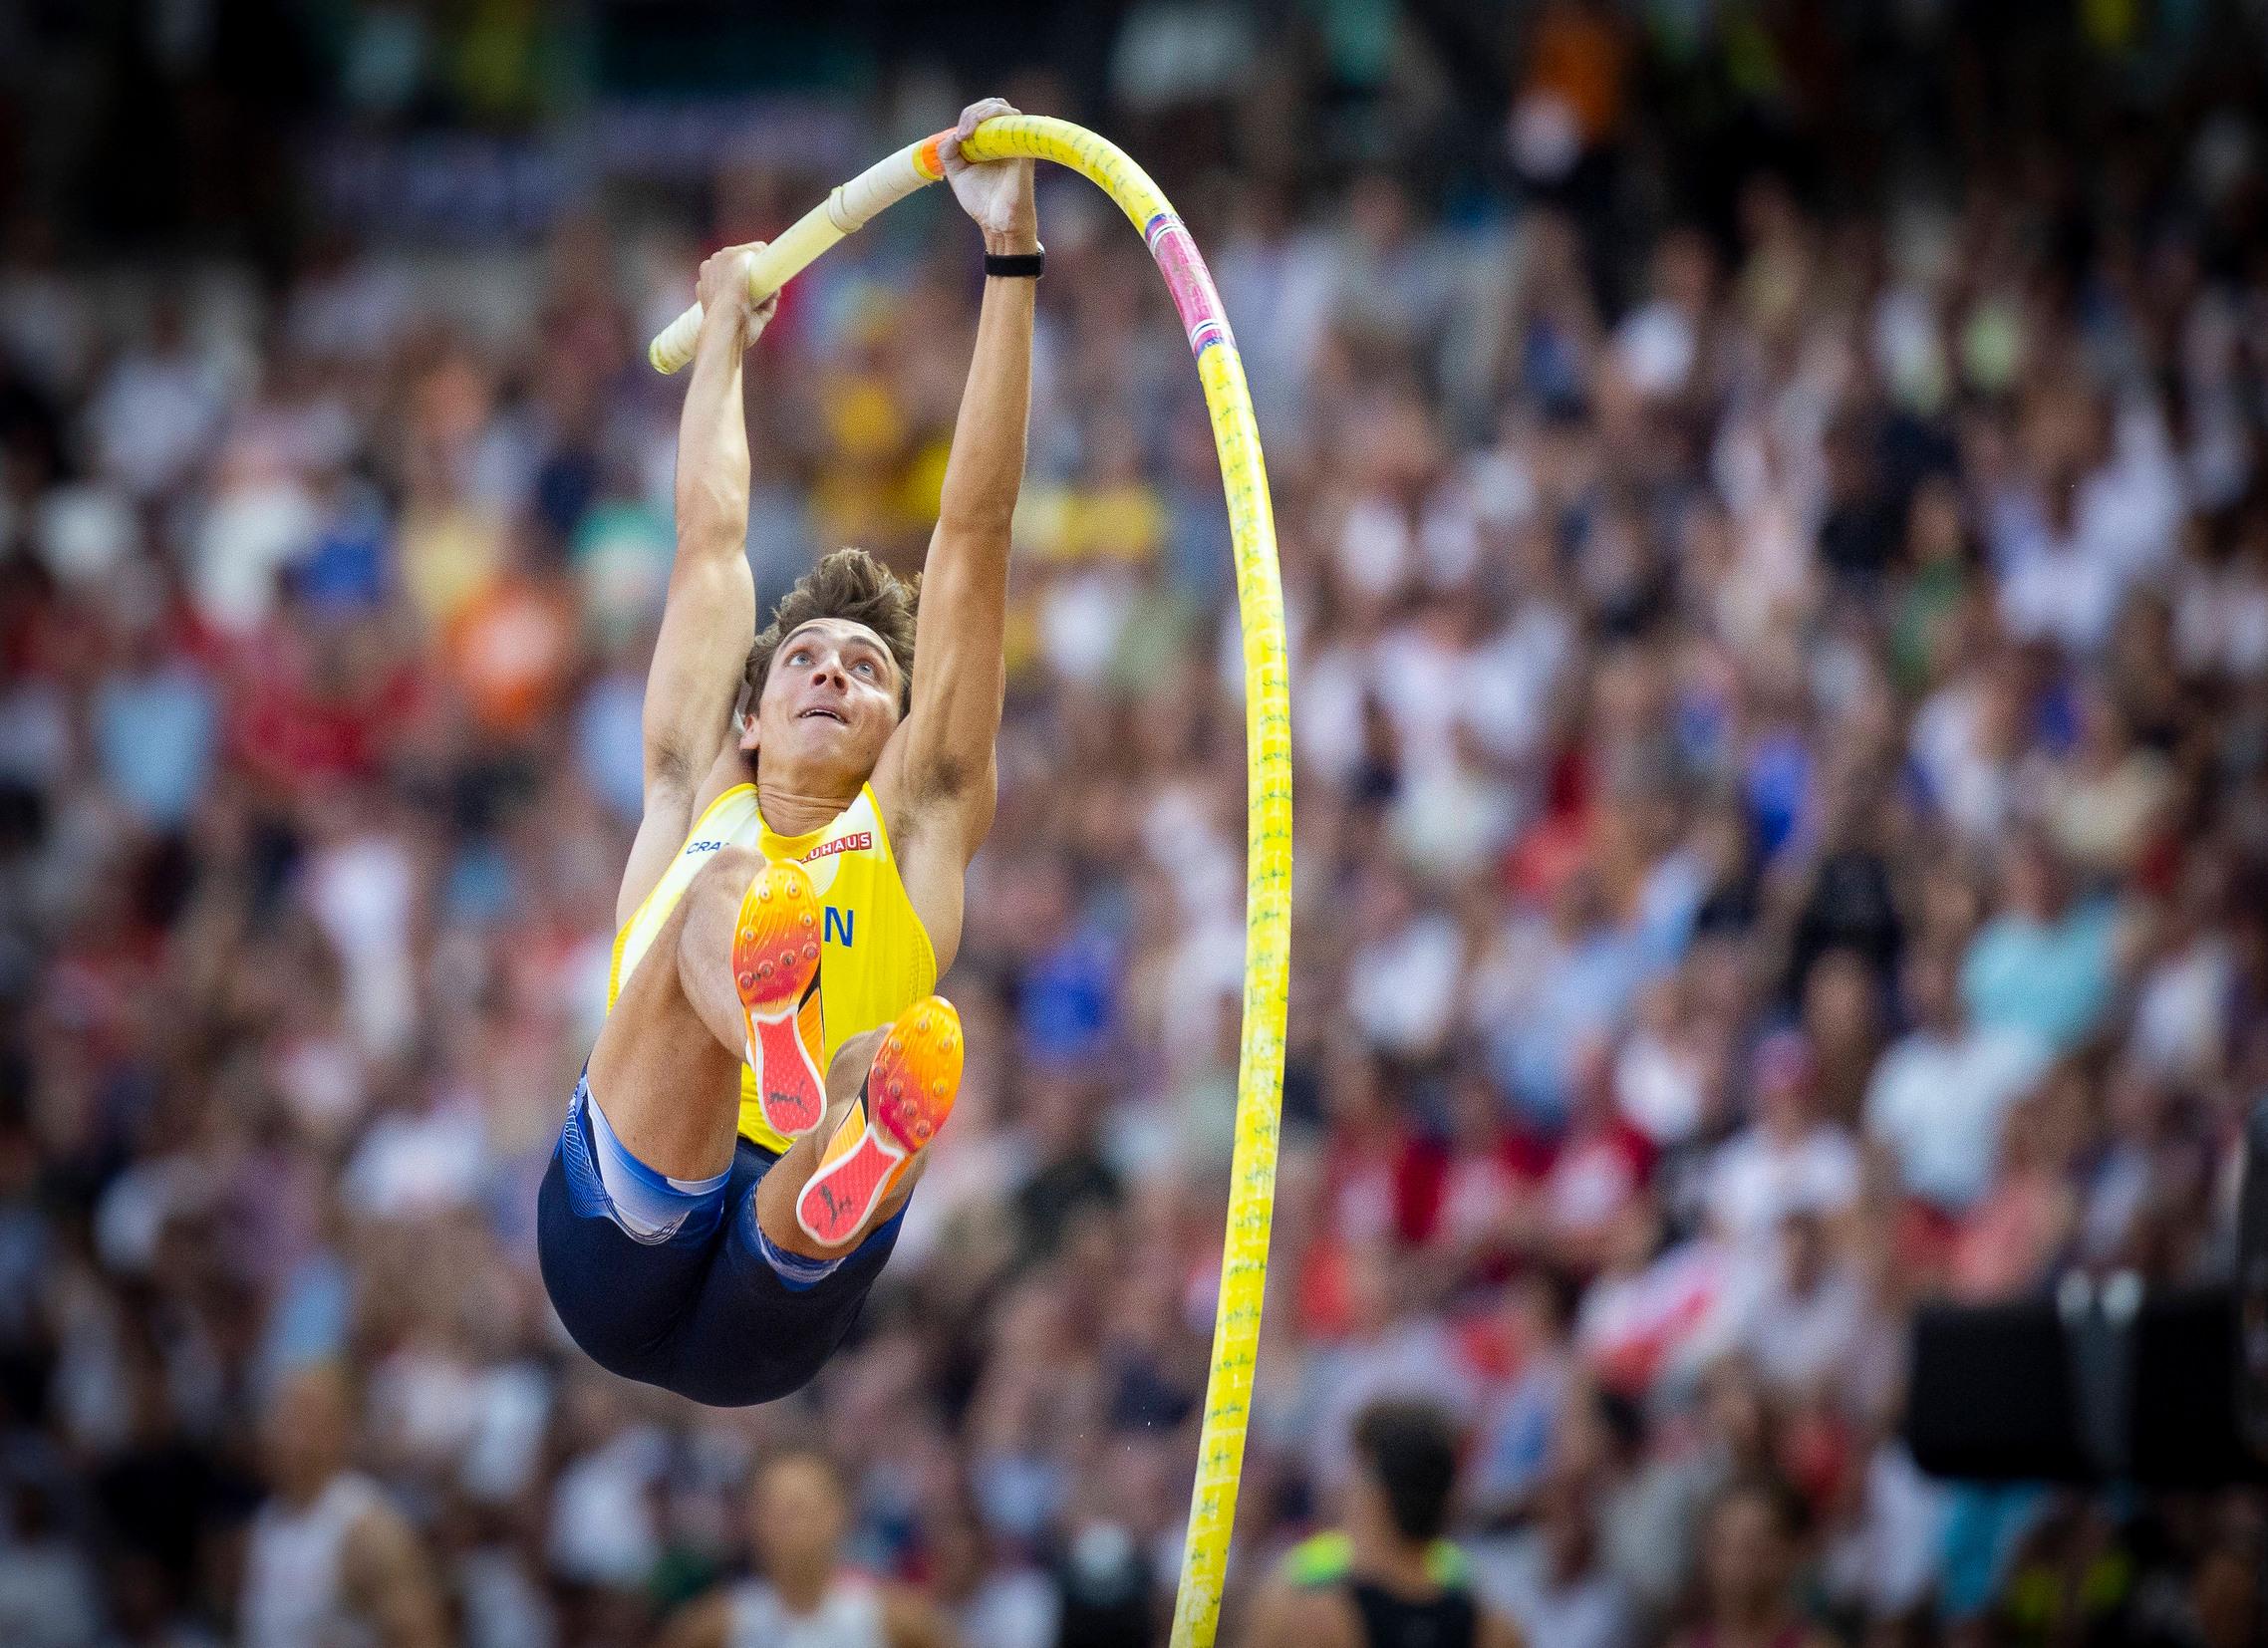 Swedish superstar Armand Duplantis retaining his World Championship gold in Budapest.